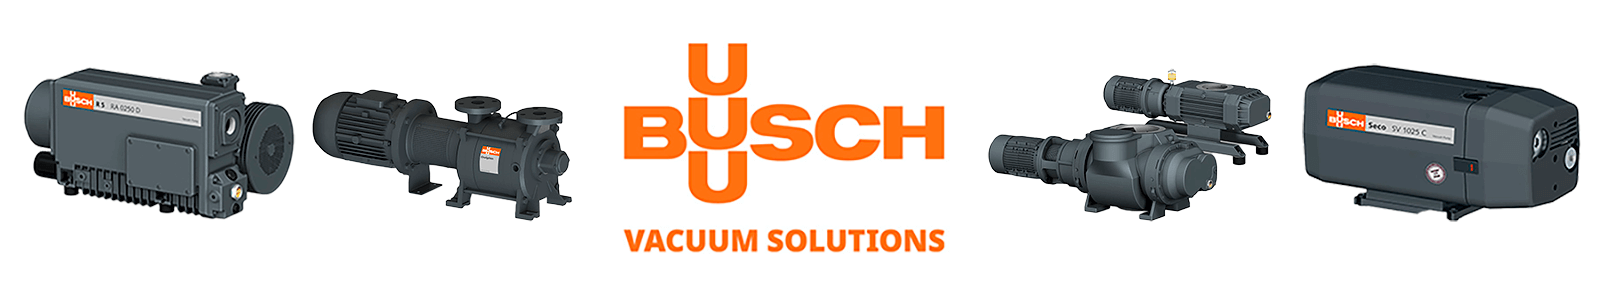 Busch Genuine Vacuum Pump Oils